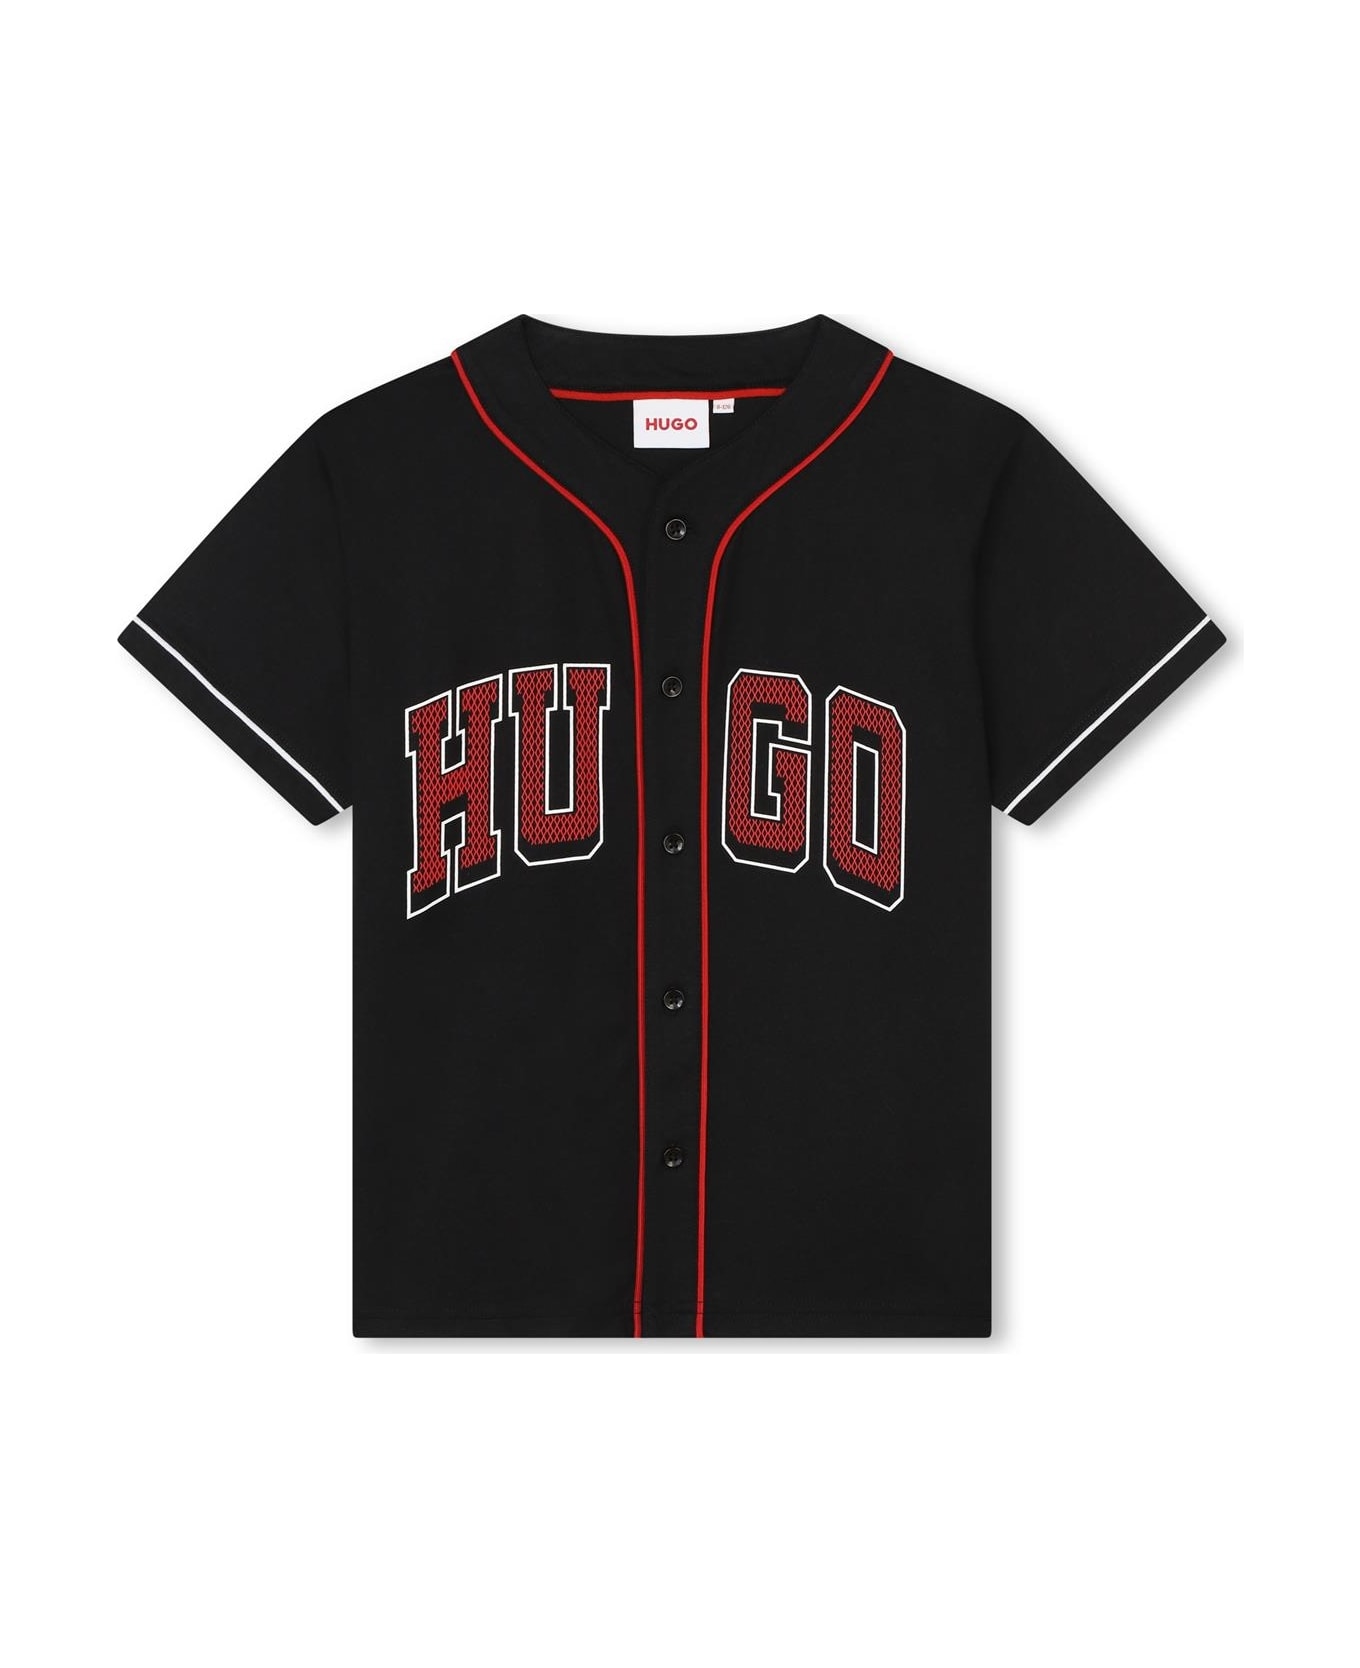 Hugo Boss Shirt With Print - Black